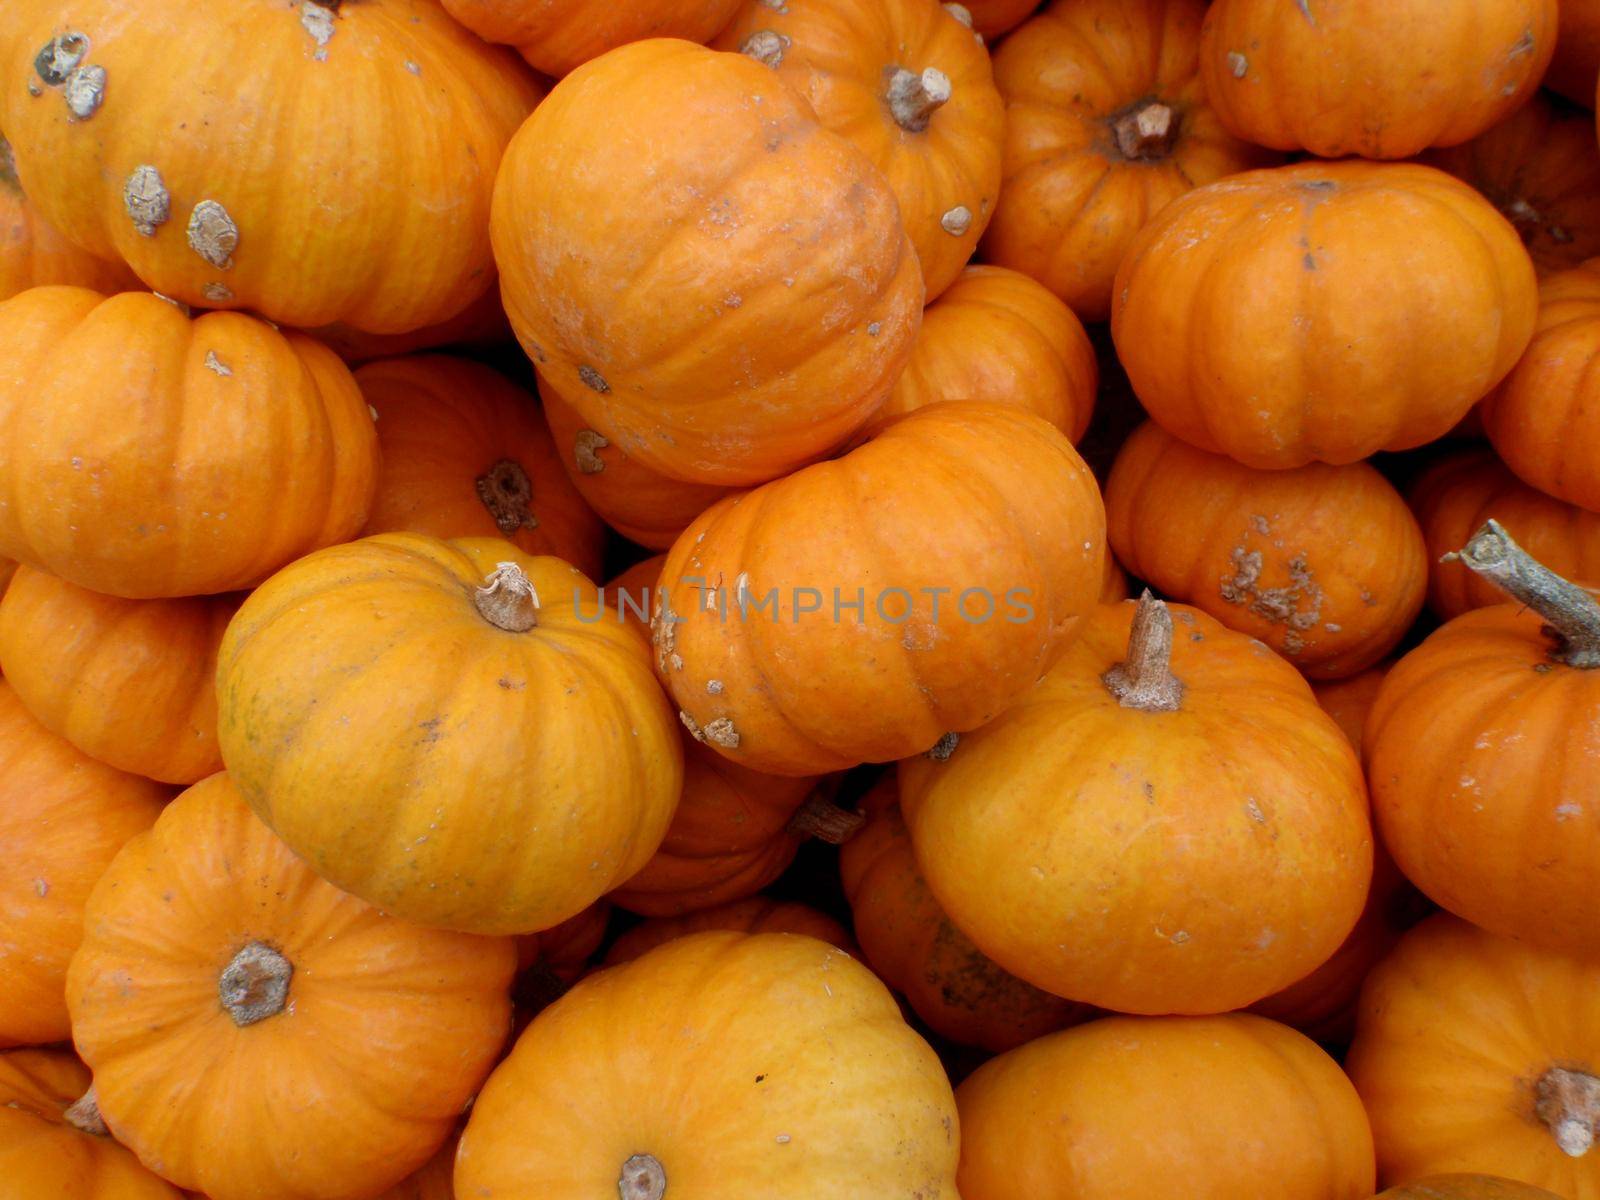 Close up of small organic pumpkins at a farmers market in San Francisco.